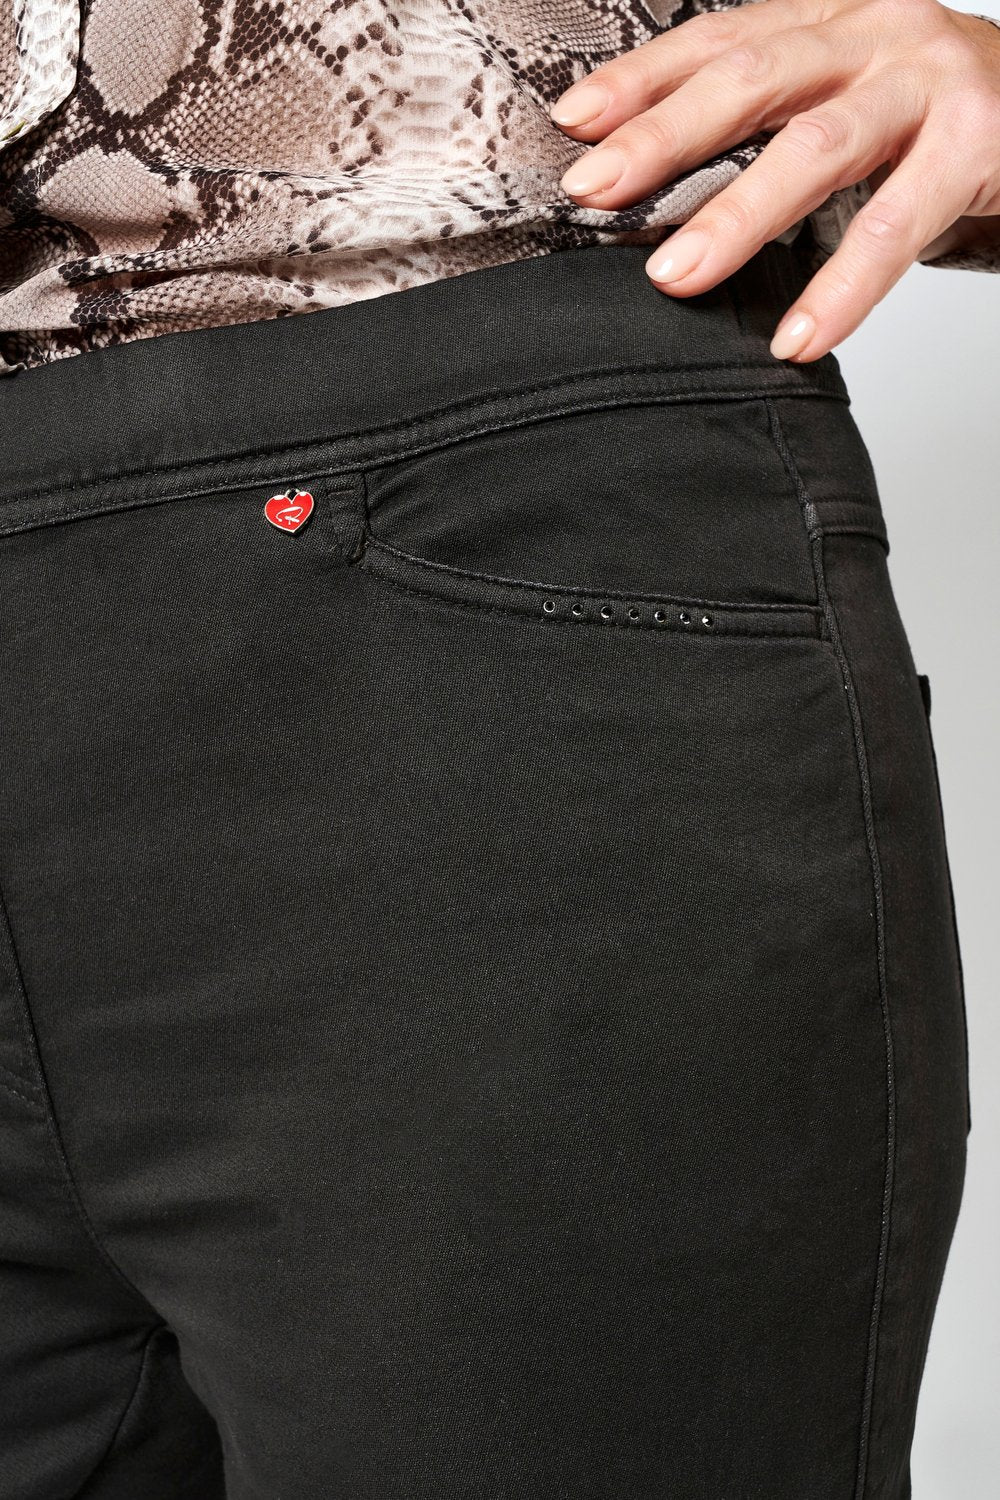 Studded Pocket Pull-On Pant